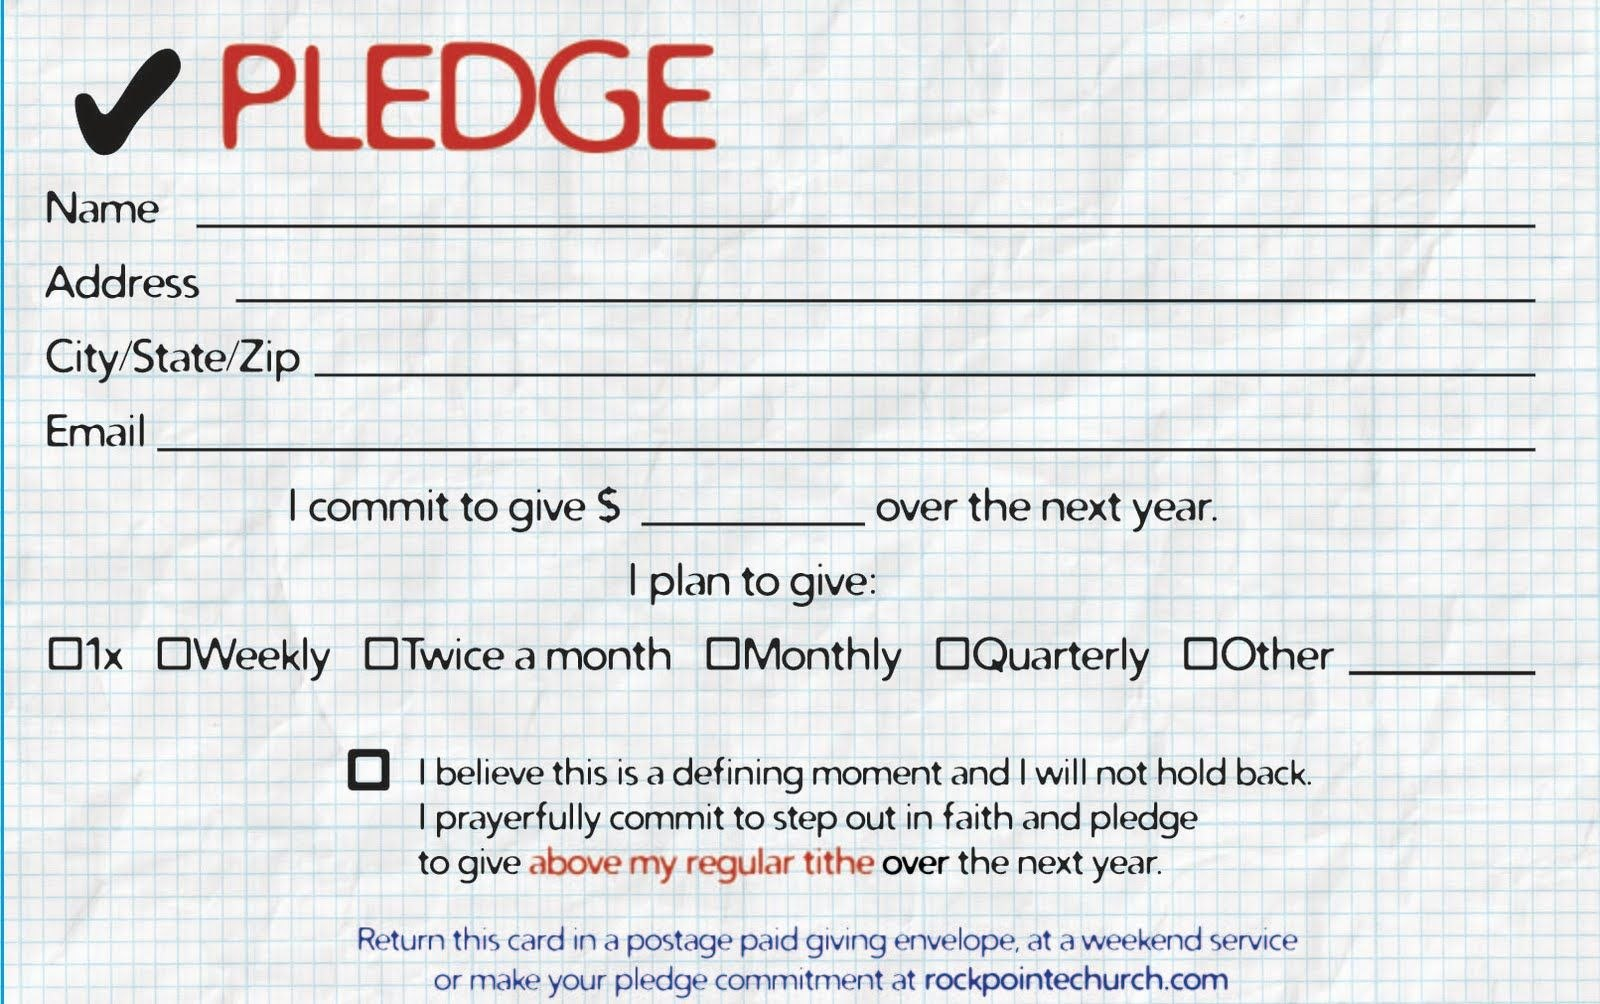 Pledge Cards For Churches  Pledge Card Templates  My Stuff in Church Pledge Card Template